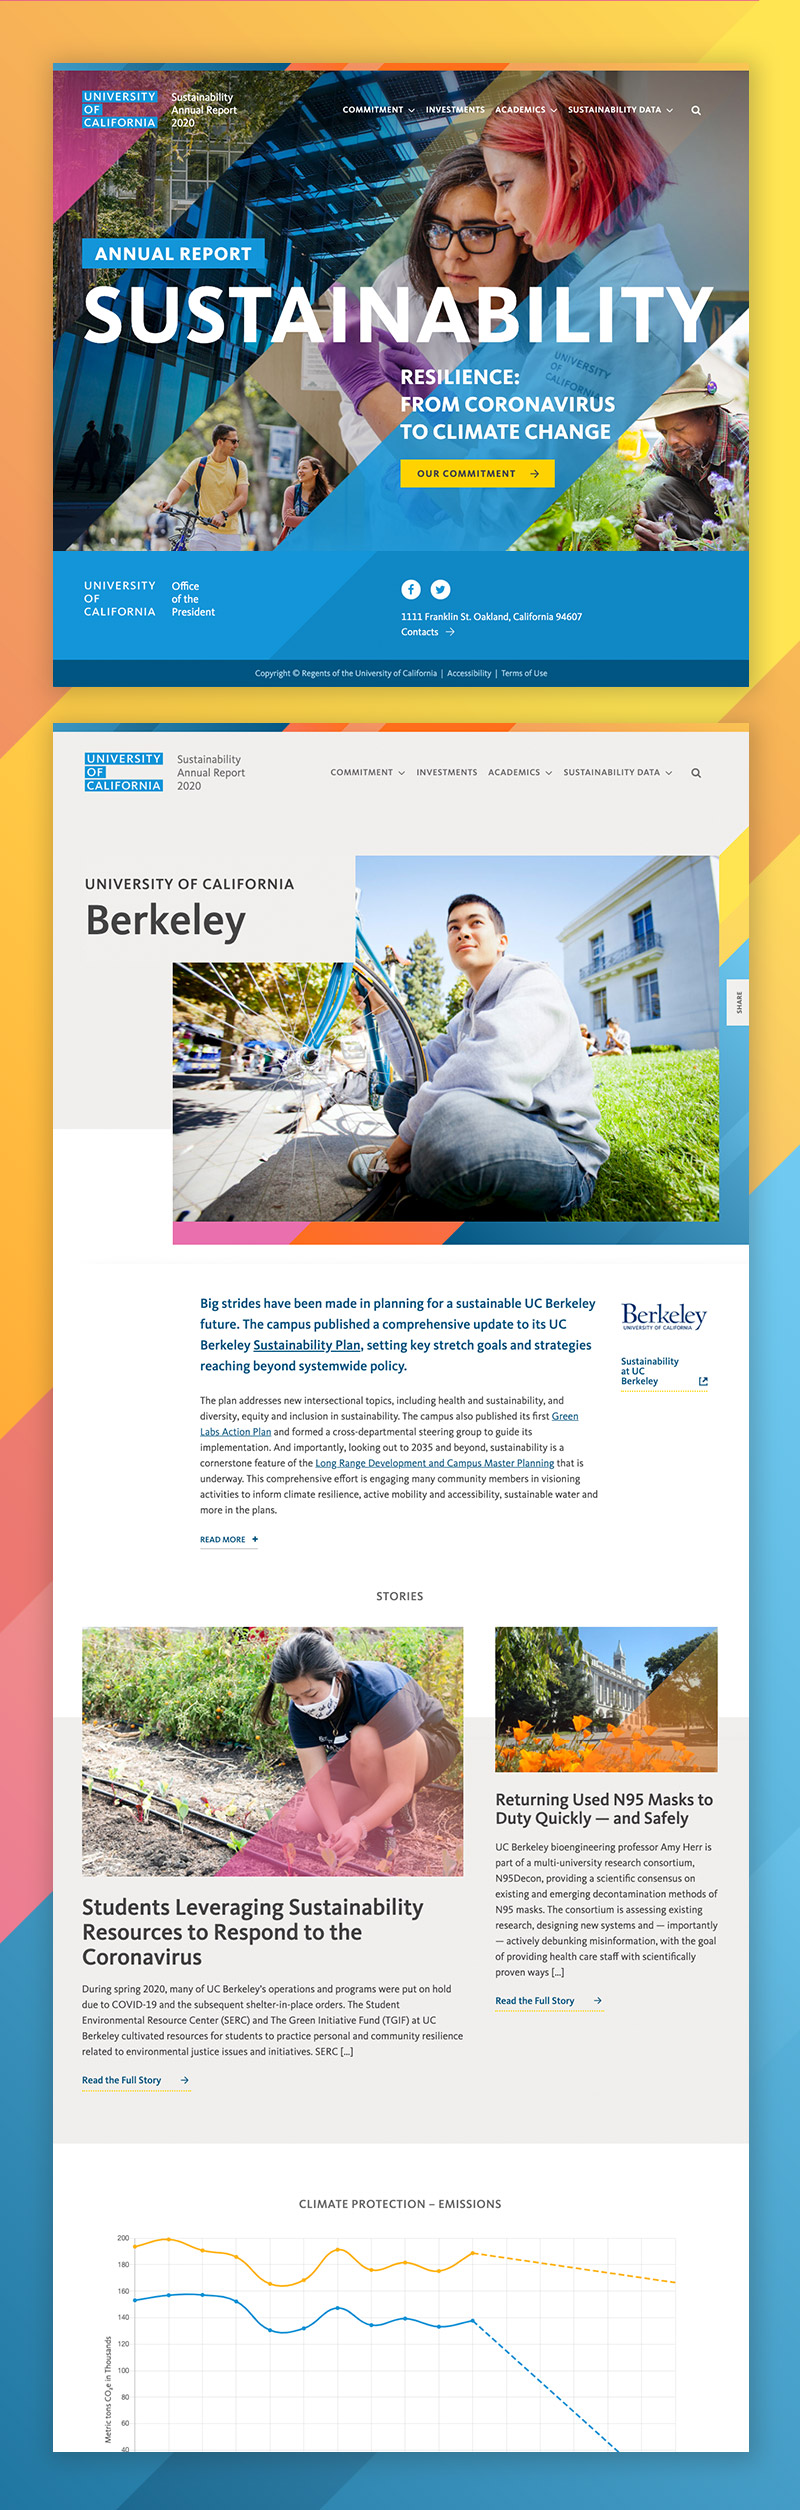 University of California - Sustainability Annual Report 2020